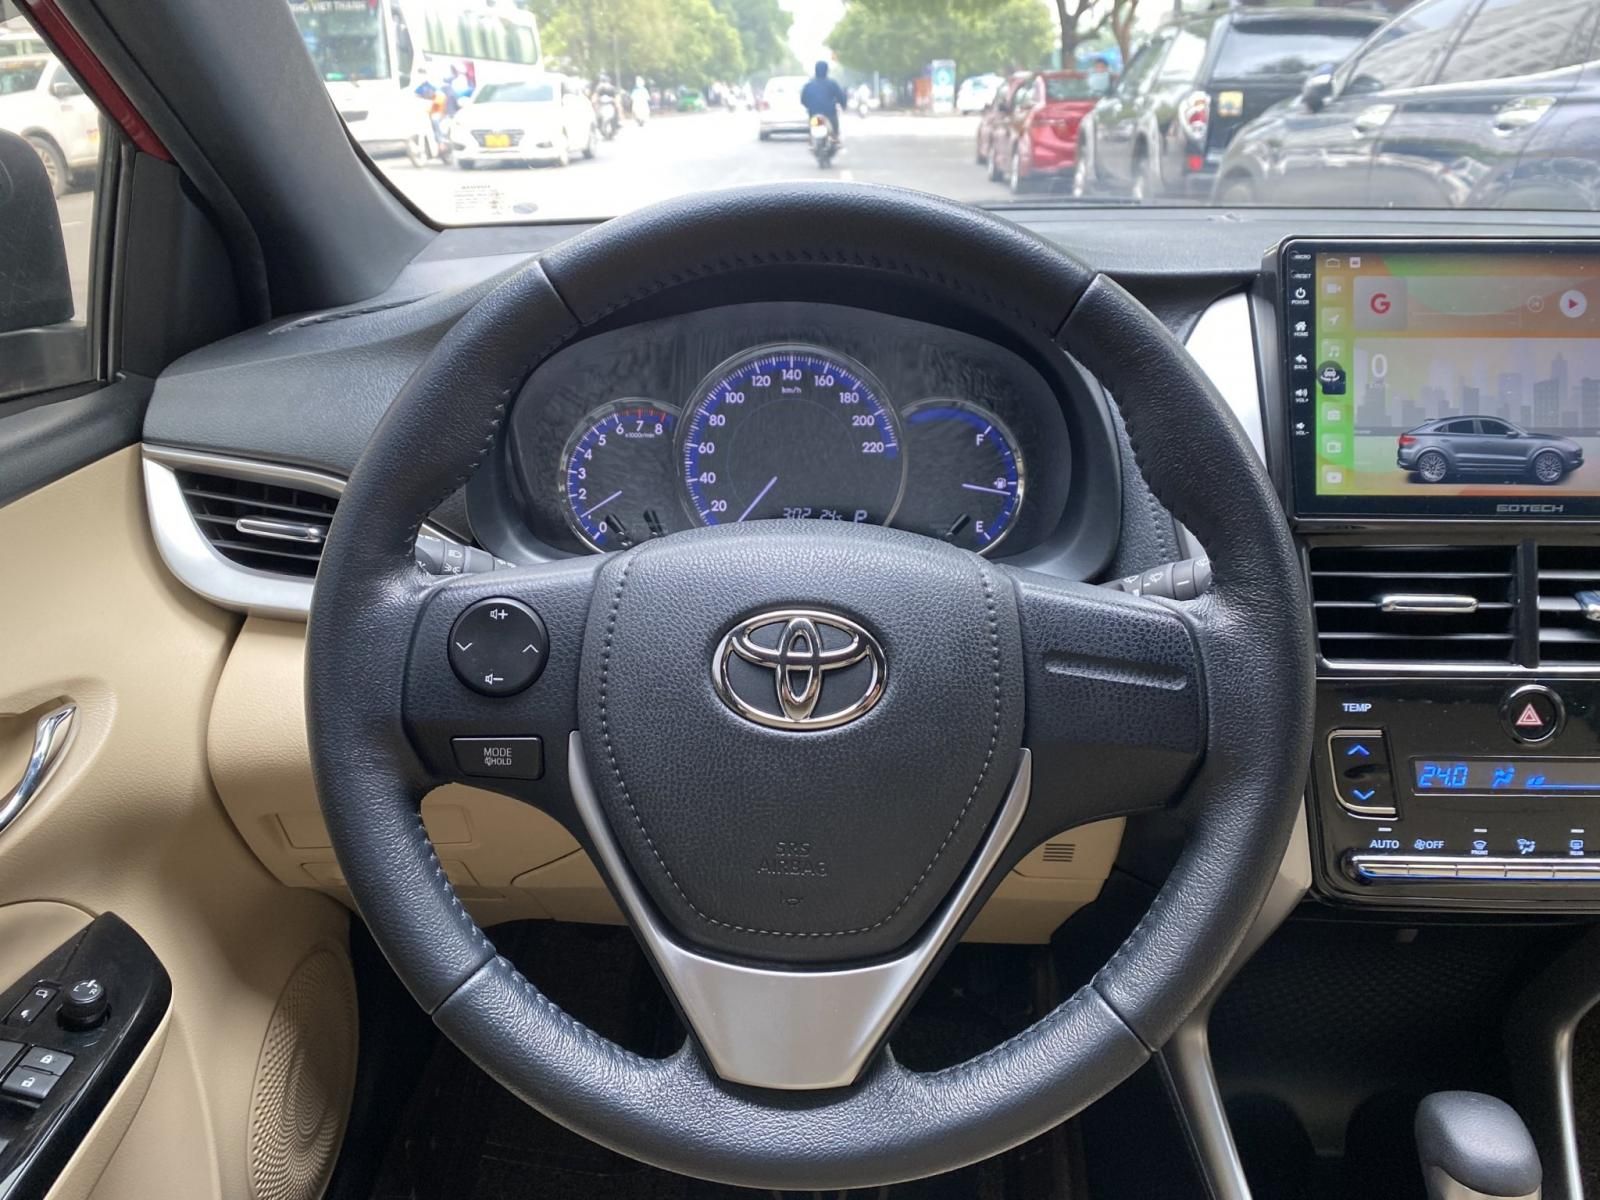 Toyota Yaris 2020 - Cần bán gấp xe giá 640tr